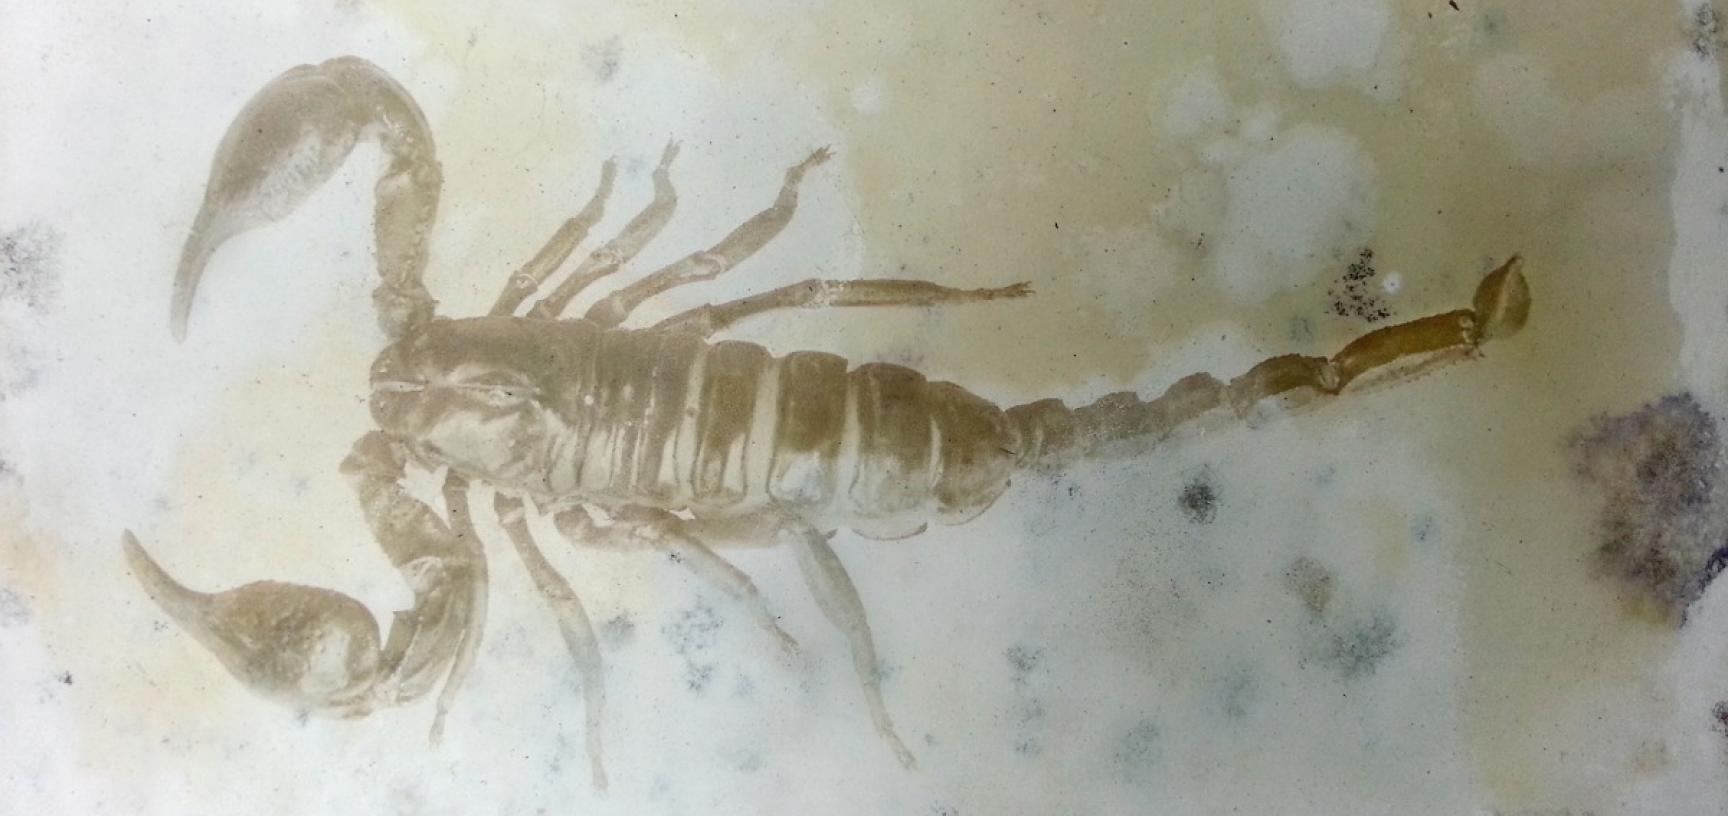 Gelatin silver print showing a species of scorpion. (Copyright RD3 Project/Rikuzentakata City Museum)